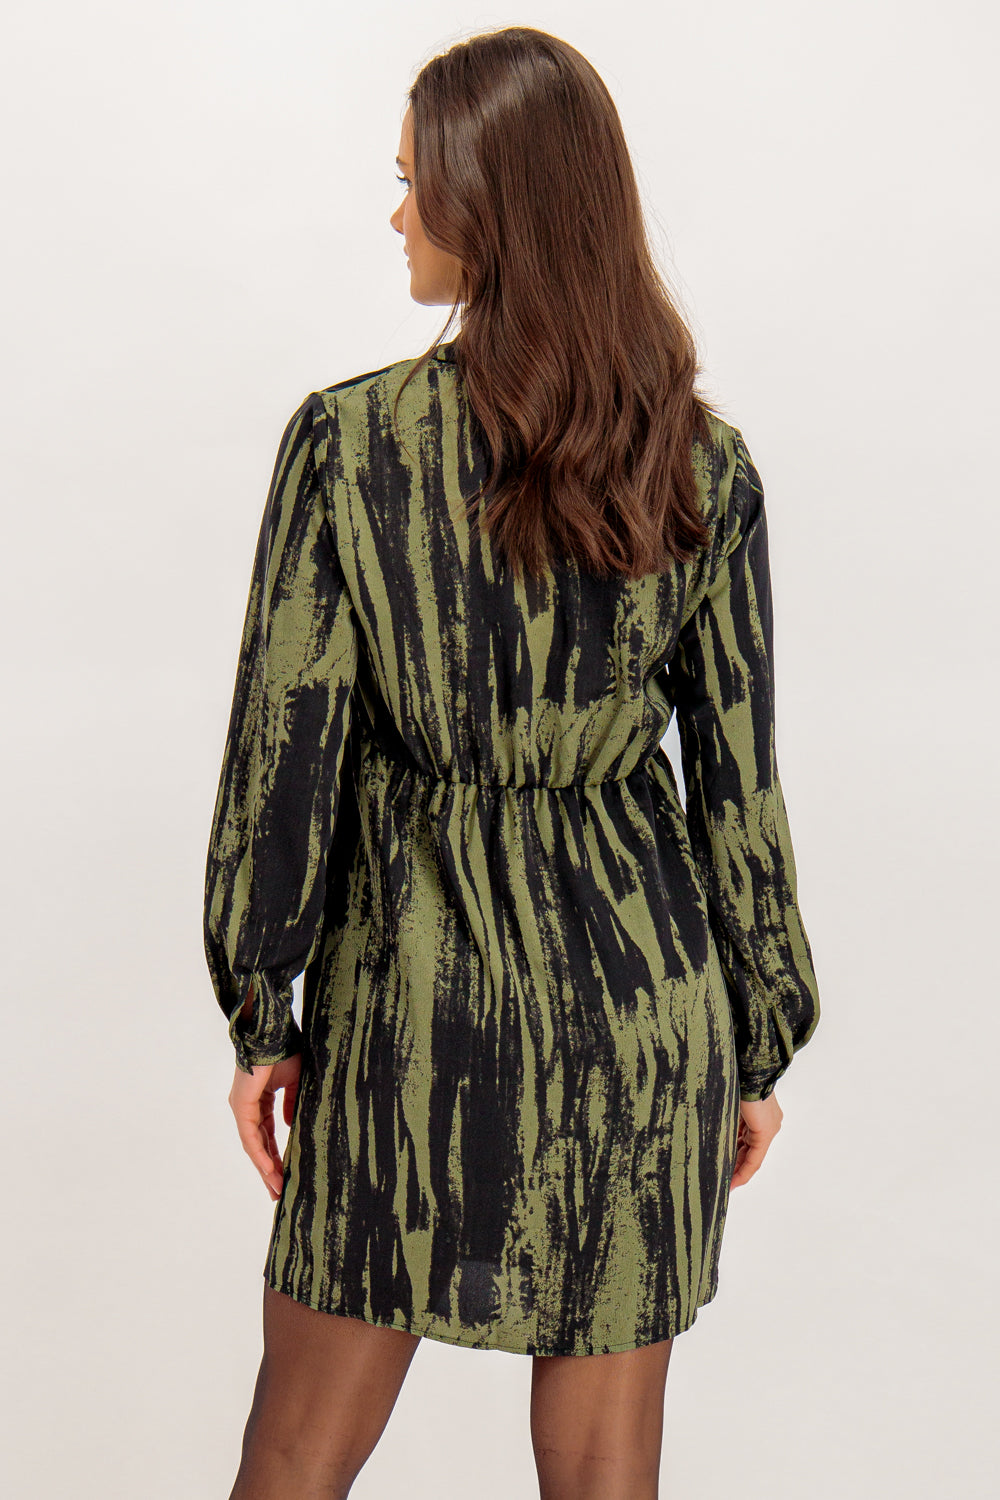 Dalina Green & Black Print Shirt Dress